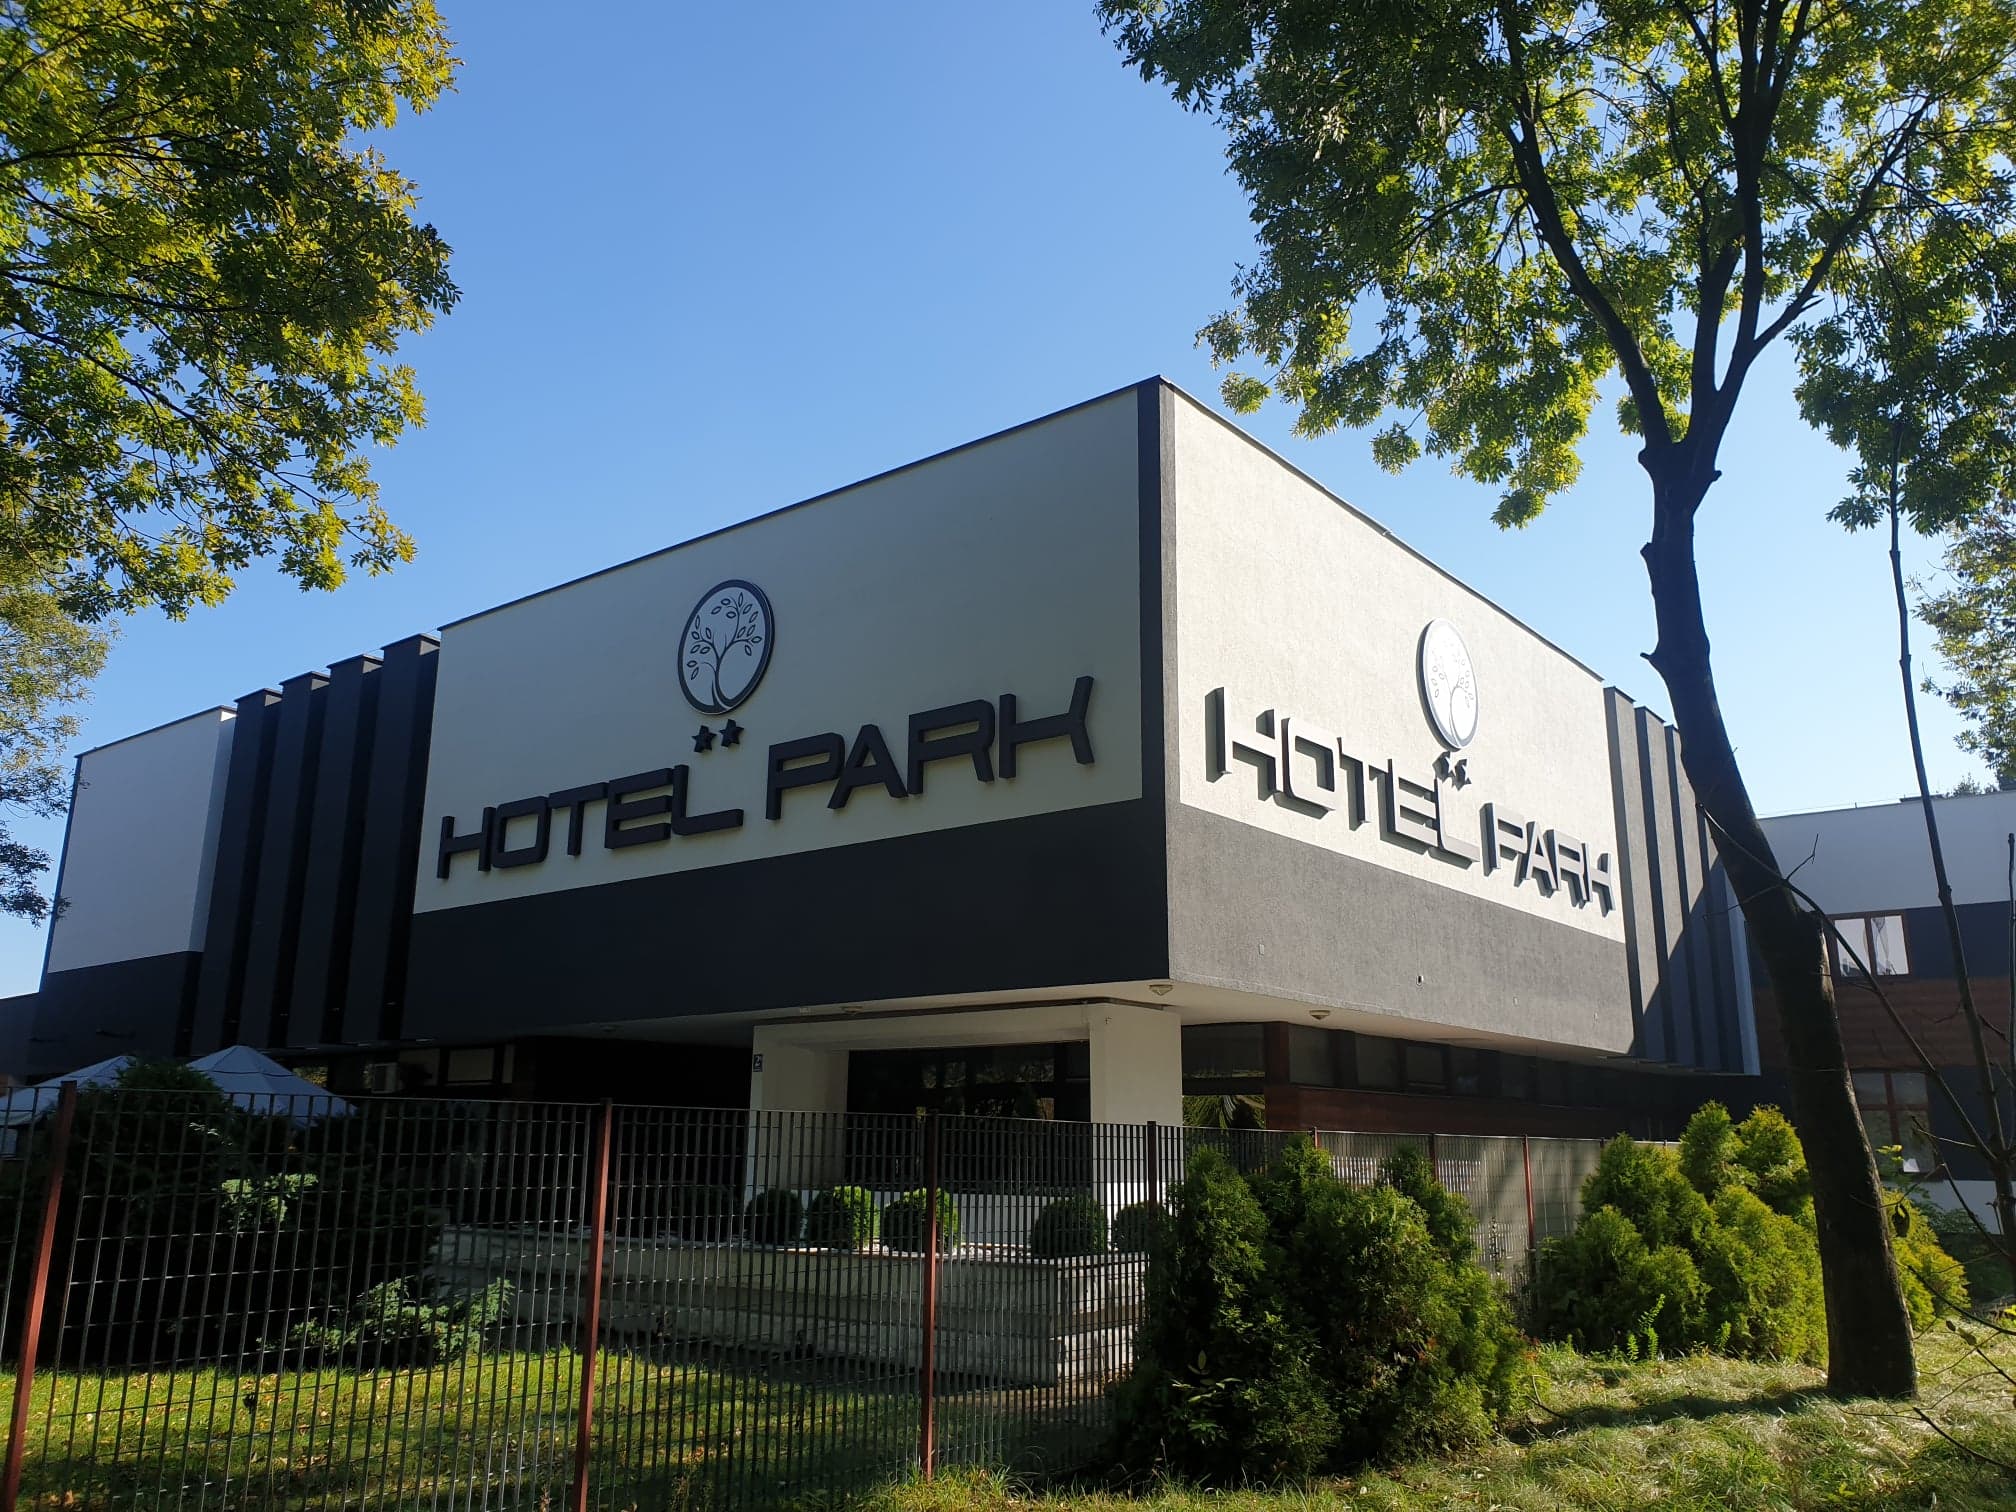 Hotel Park1